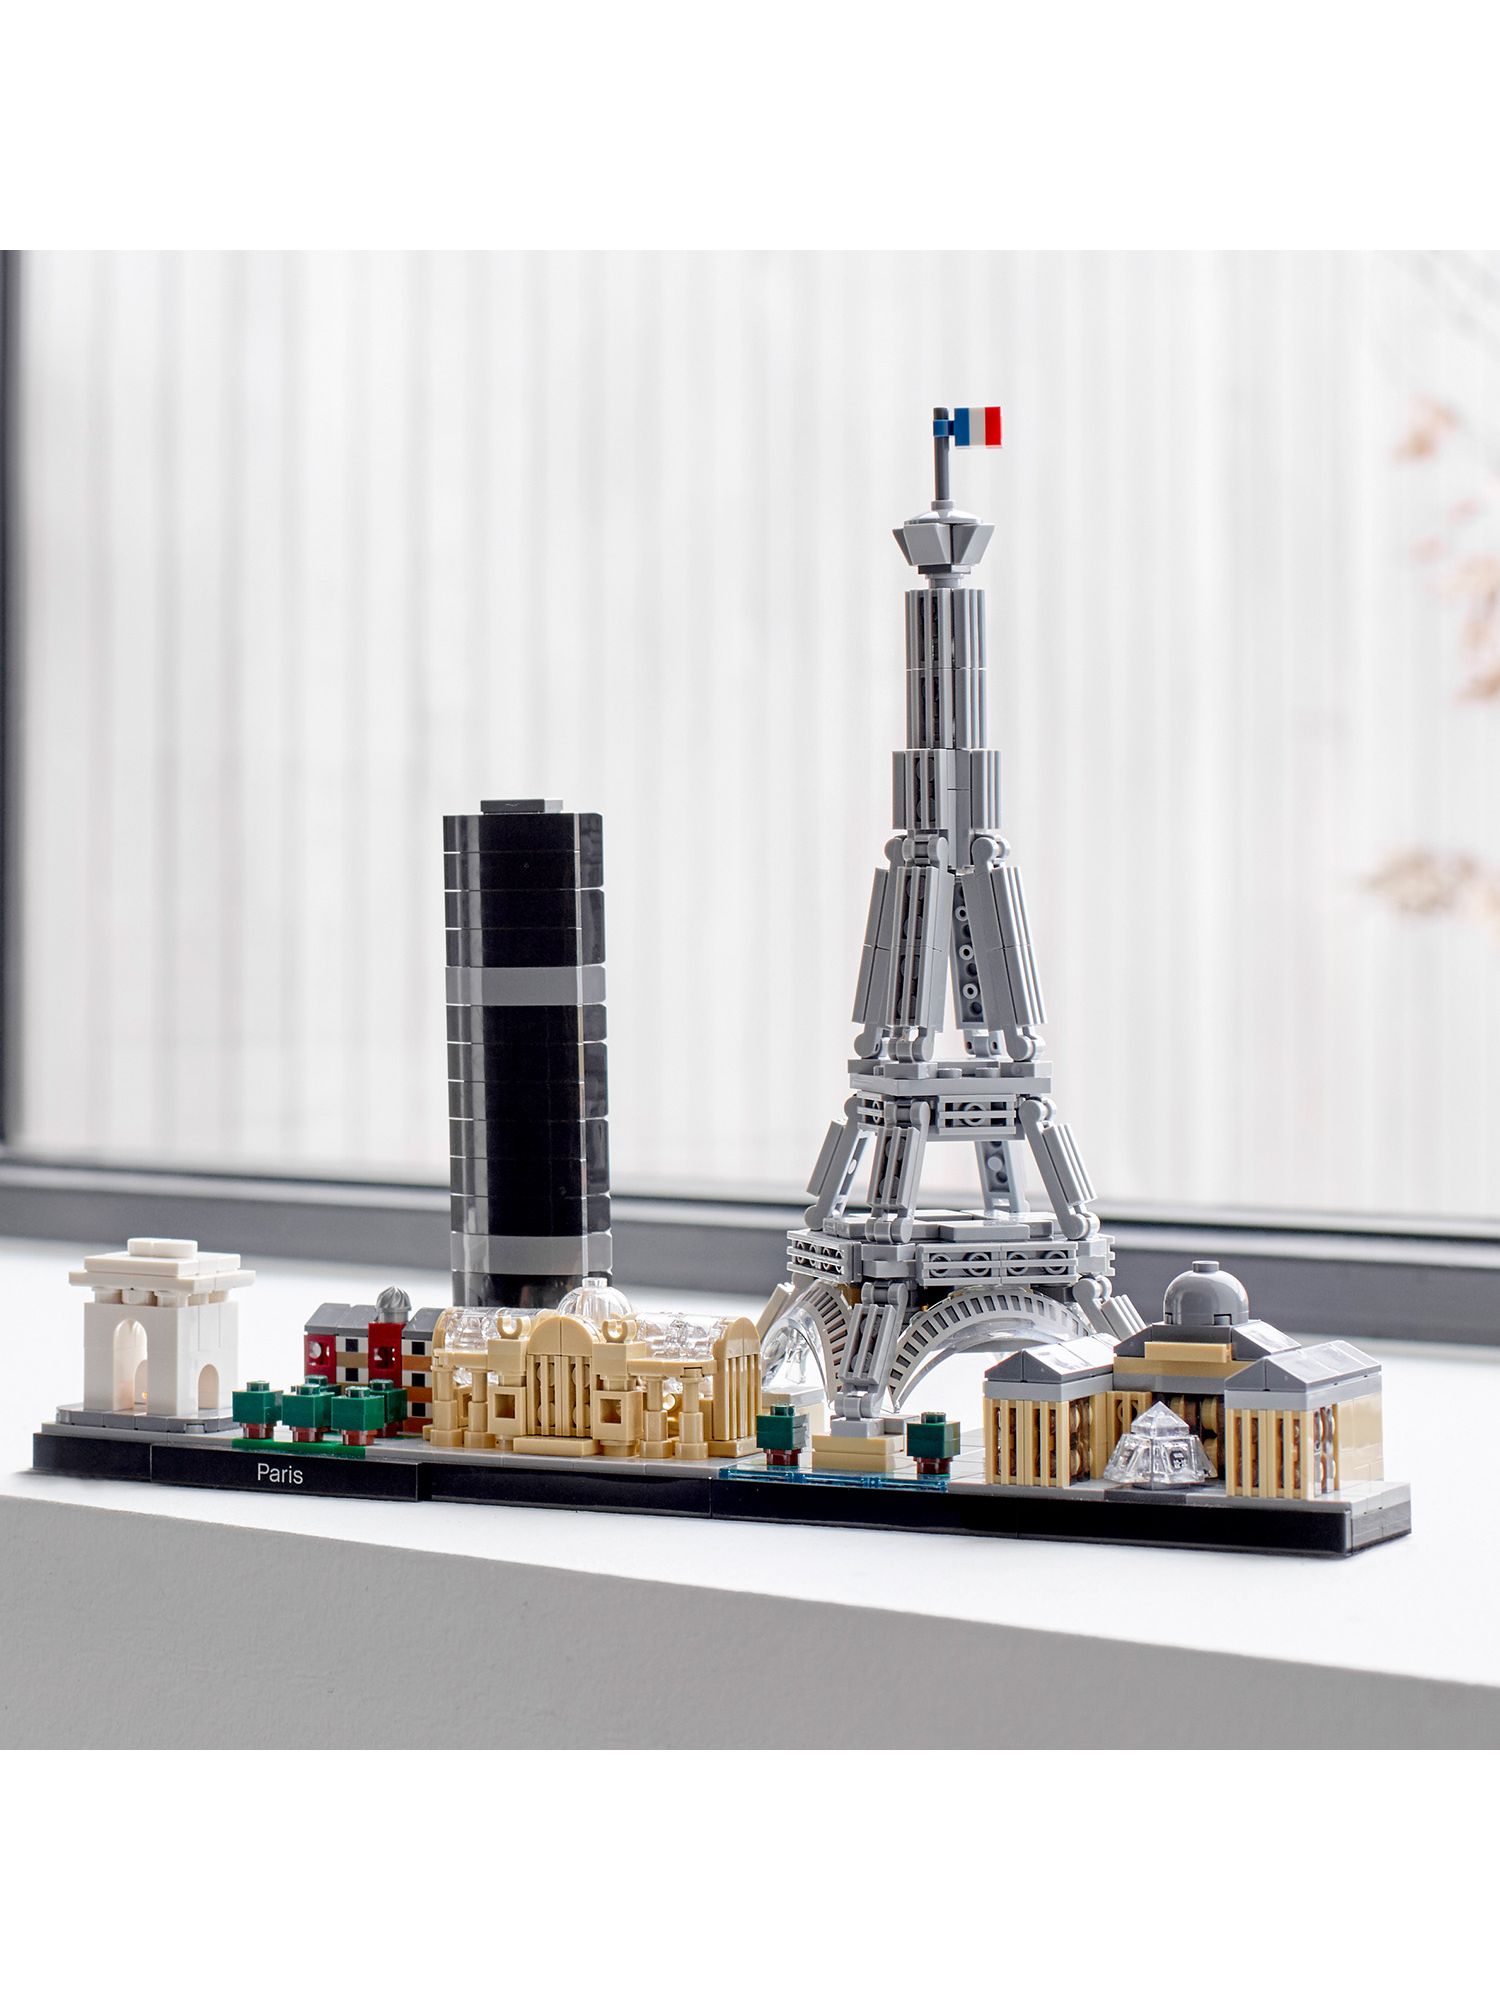 LEGO Architecture 21044 Paris at John Lewis & Partners